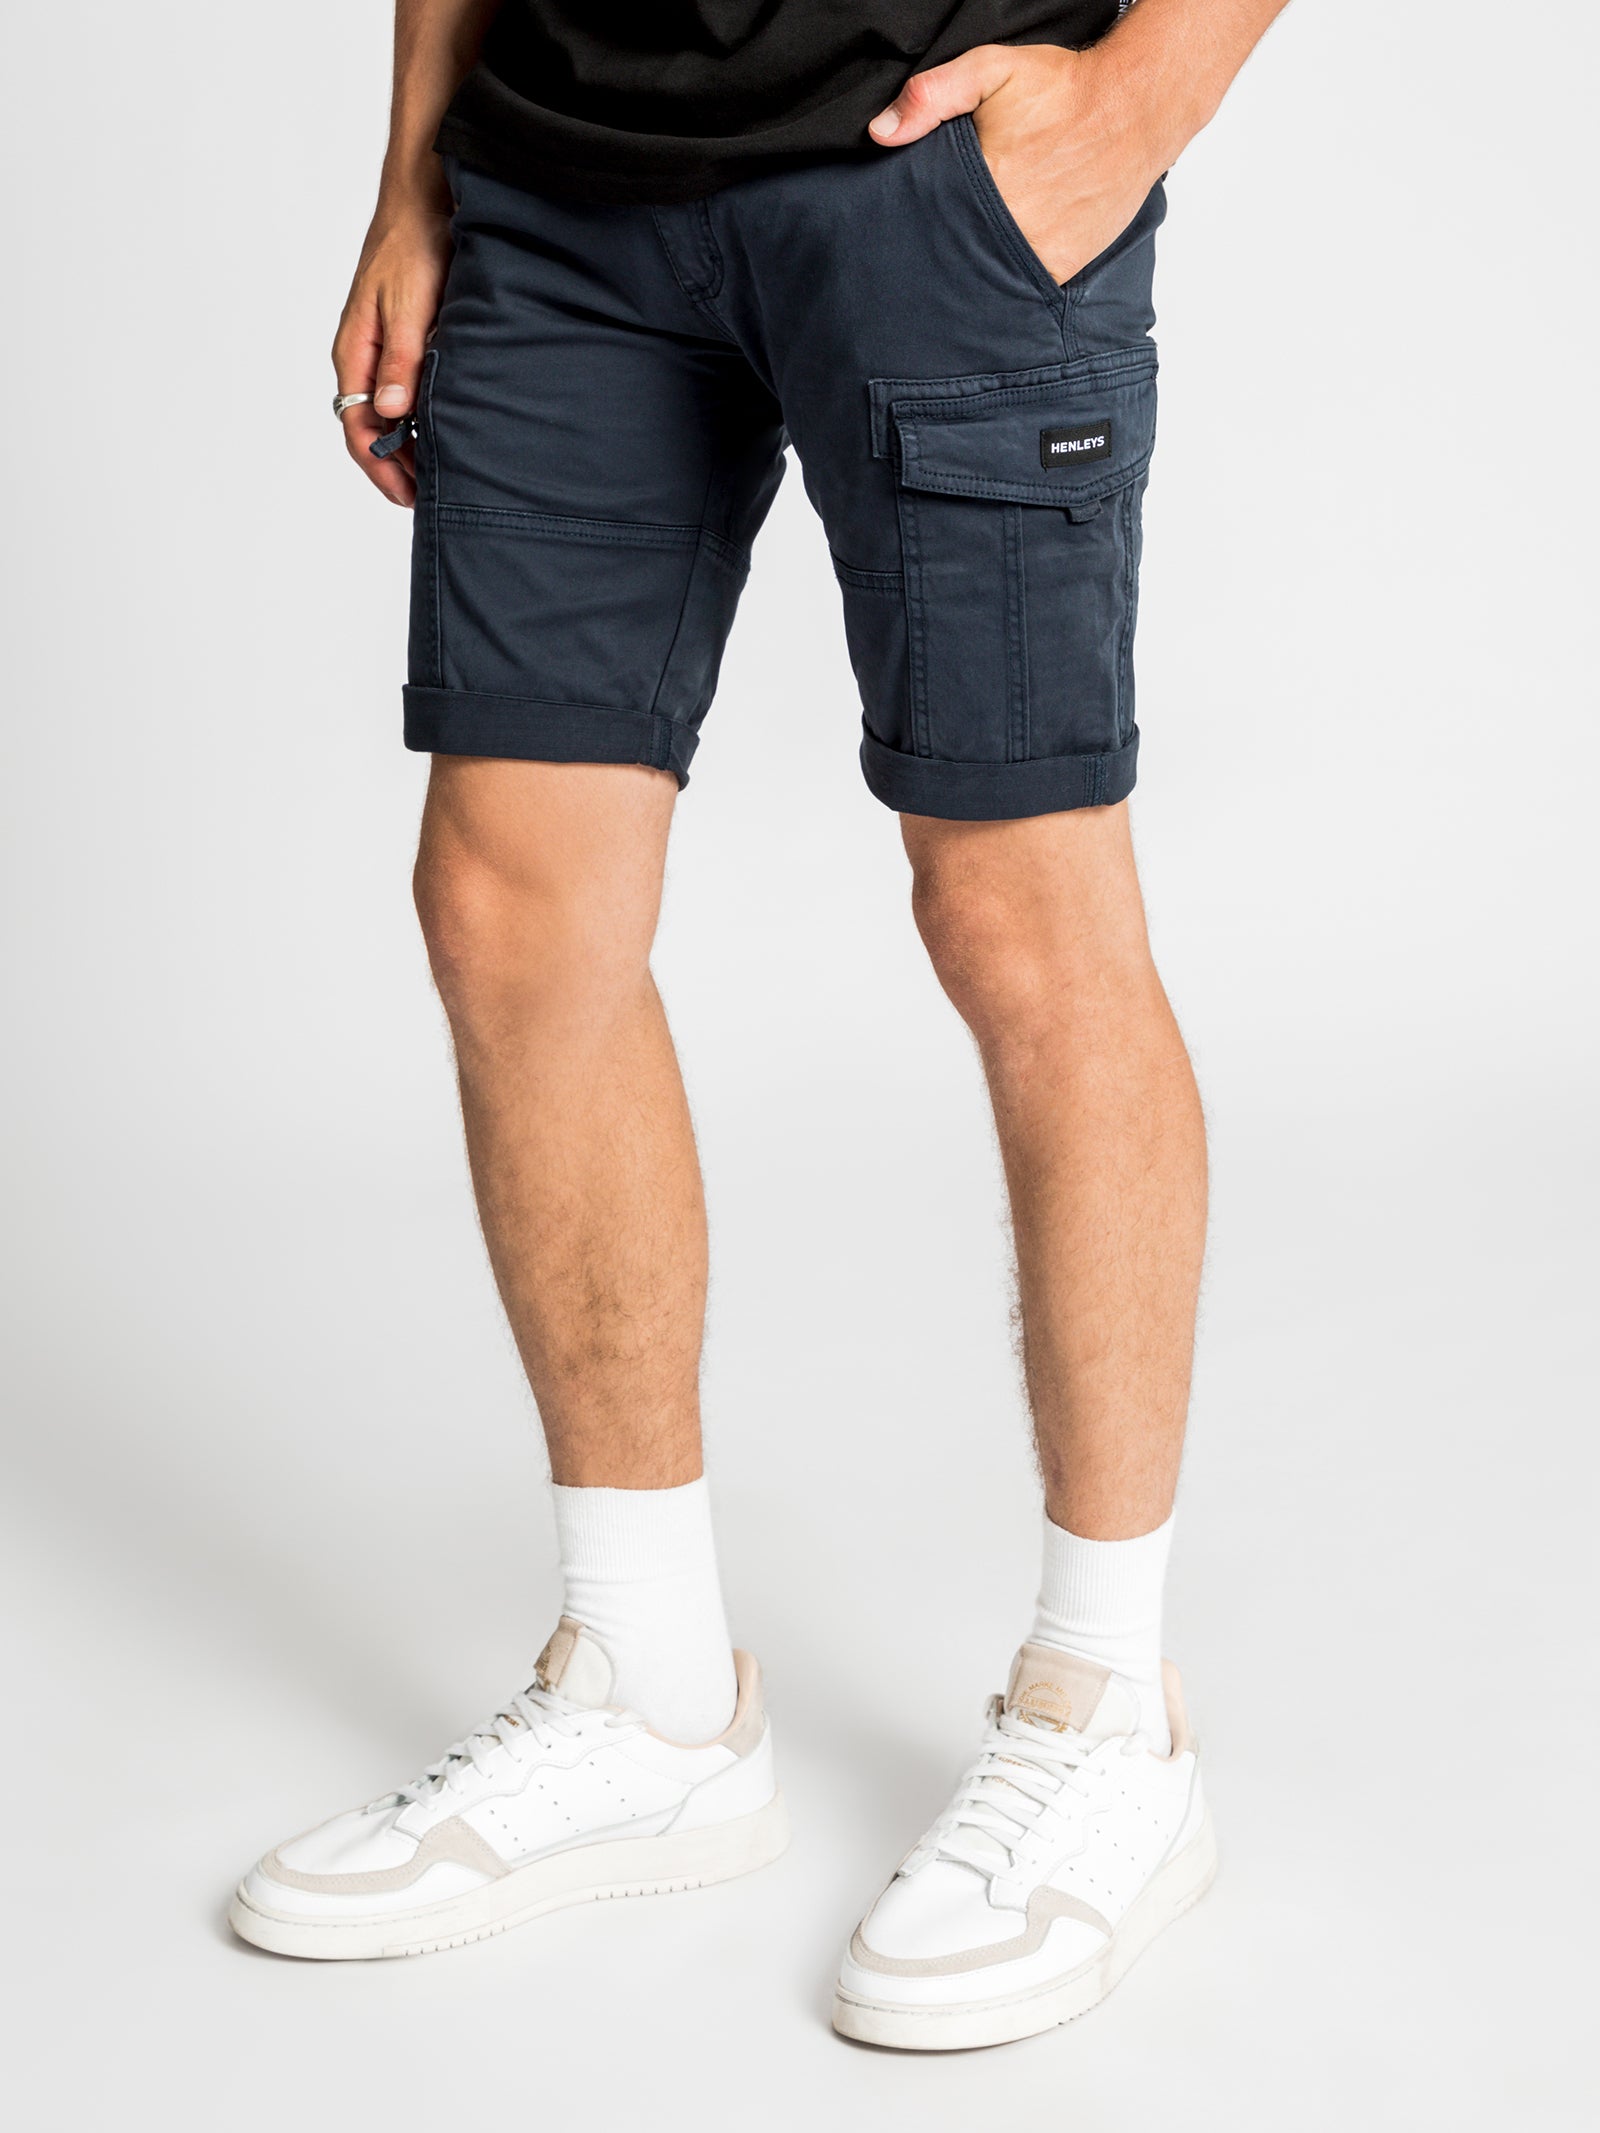 Leon Slim-Fit Cargo Shorts in Navy - Glue Store